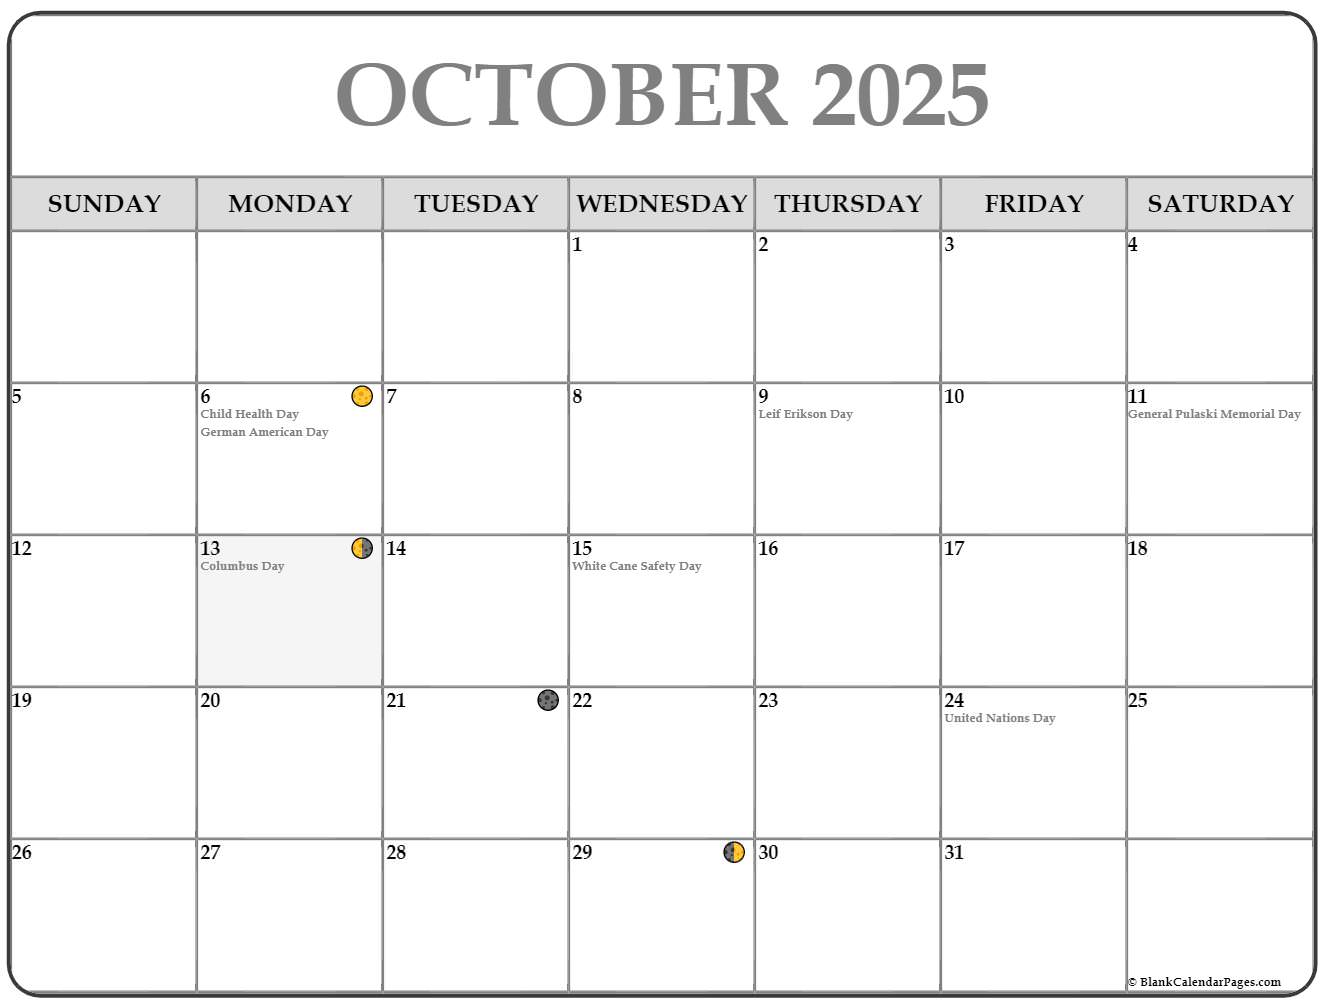 october-2025-lunar-calendar-moon-phase-calendar